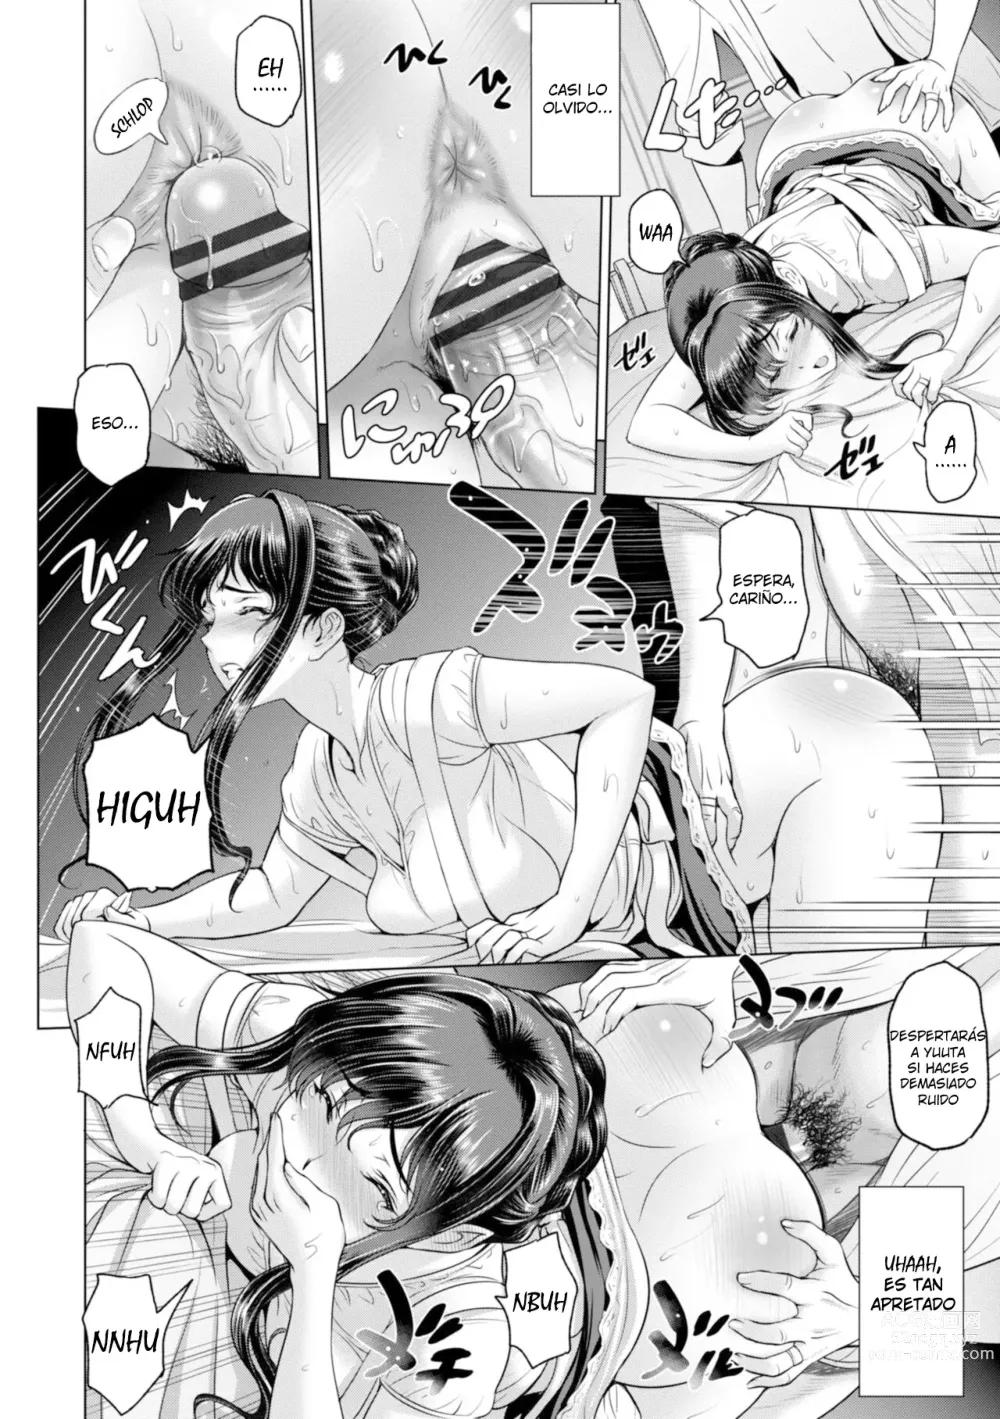 Page 16 of manga Nettori Netorare Ep.4 ~Esposa . El caso de Saori Sudou (epílogo)~